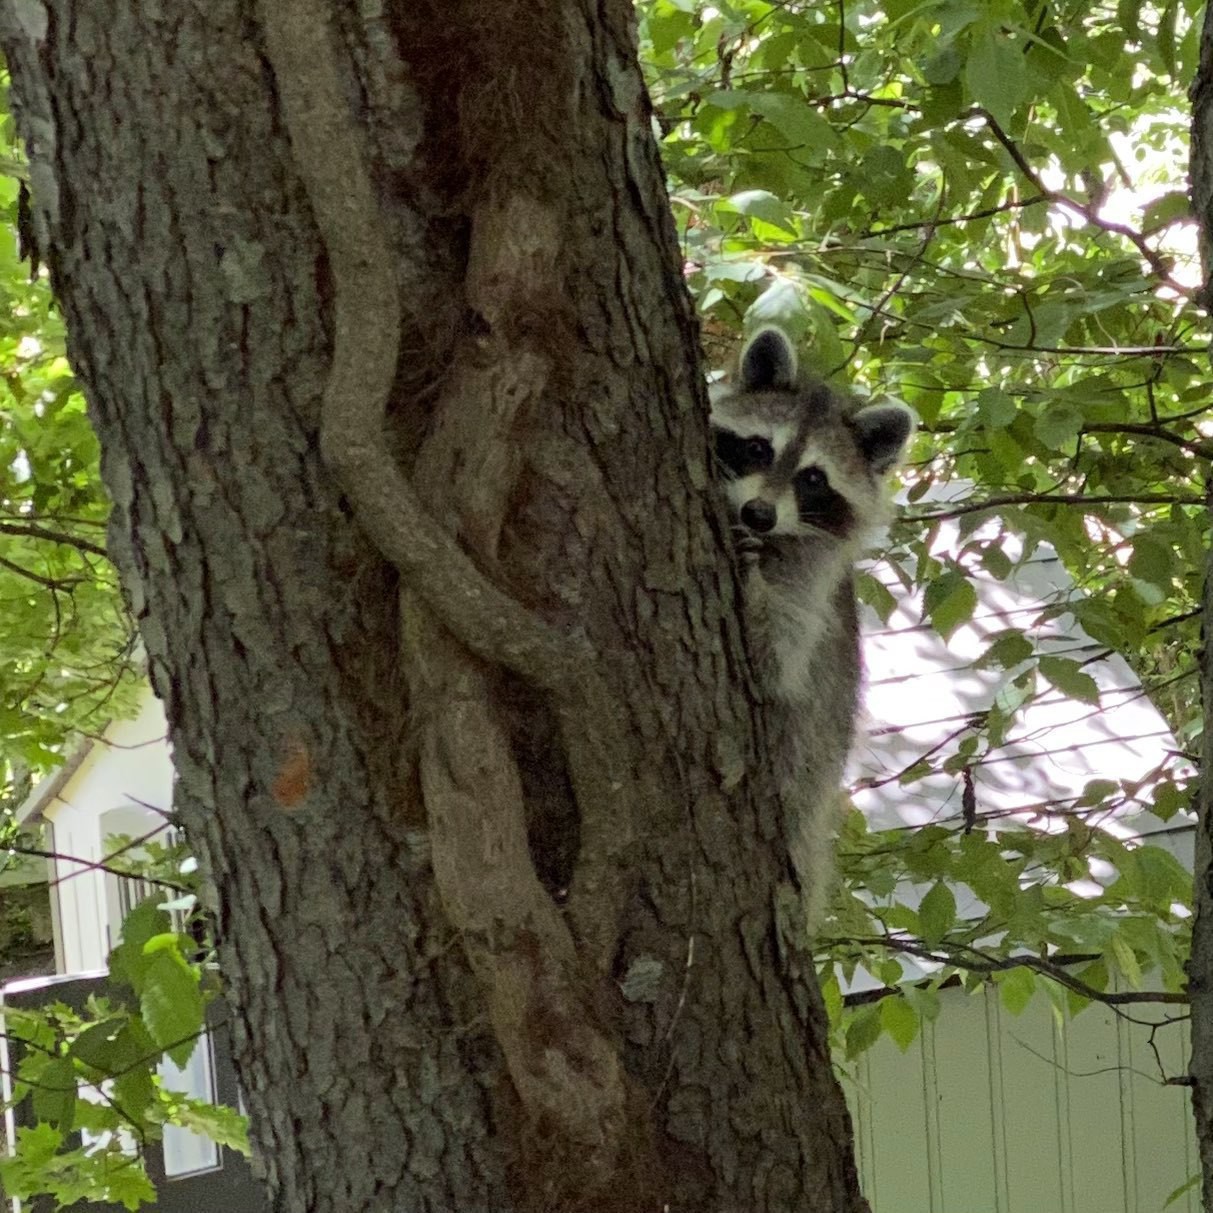 a raccoon climbing a tree, looking at the camera